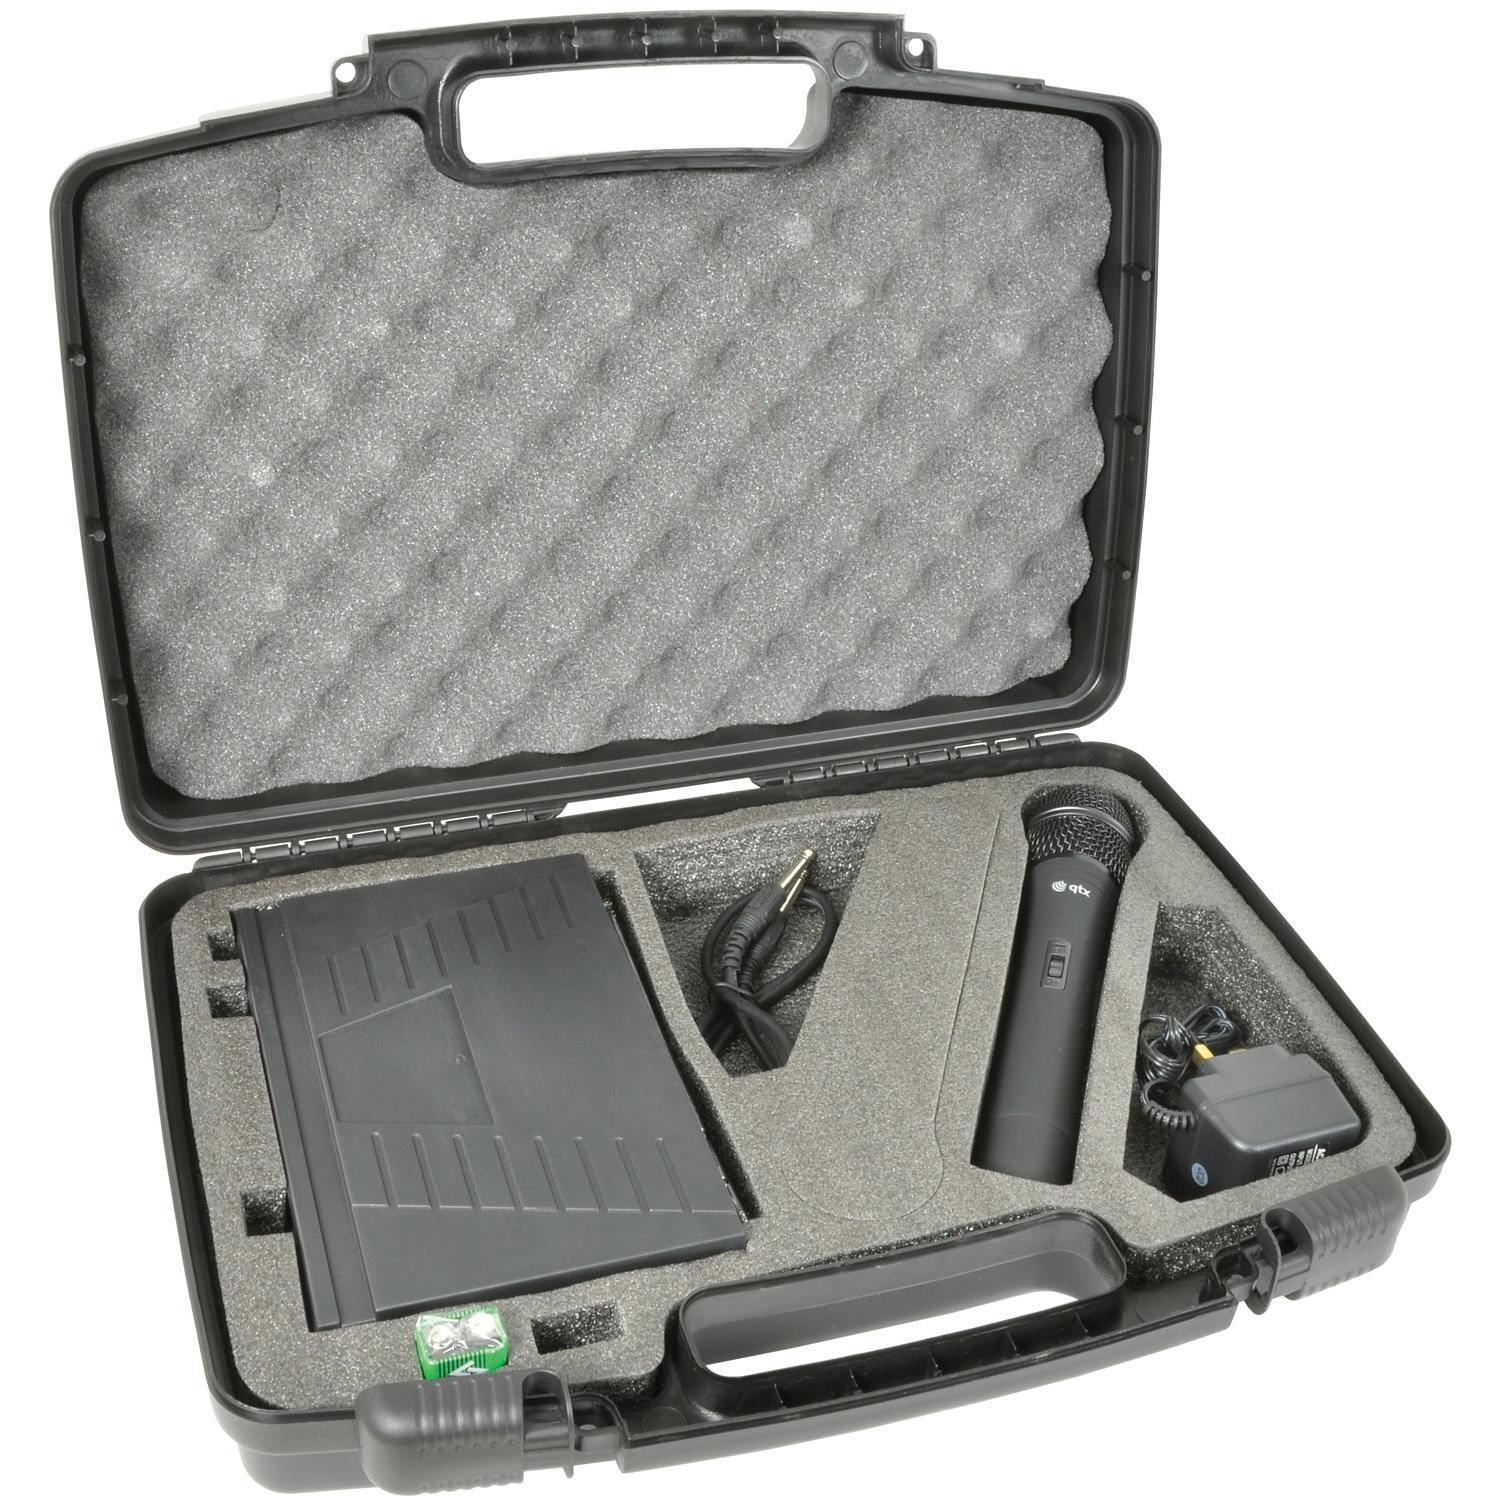 QTX VHF handheld mic wireless system - 173.8MHz - DY Pro Audio